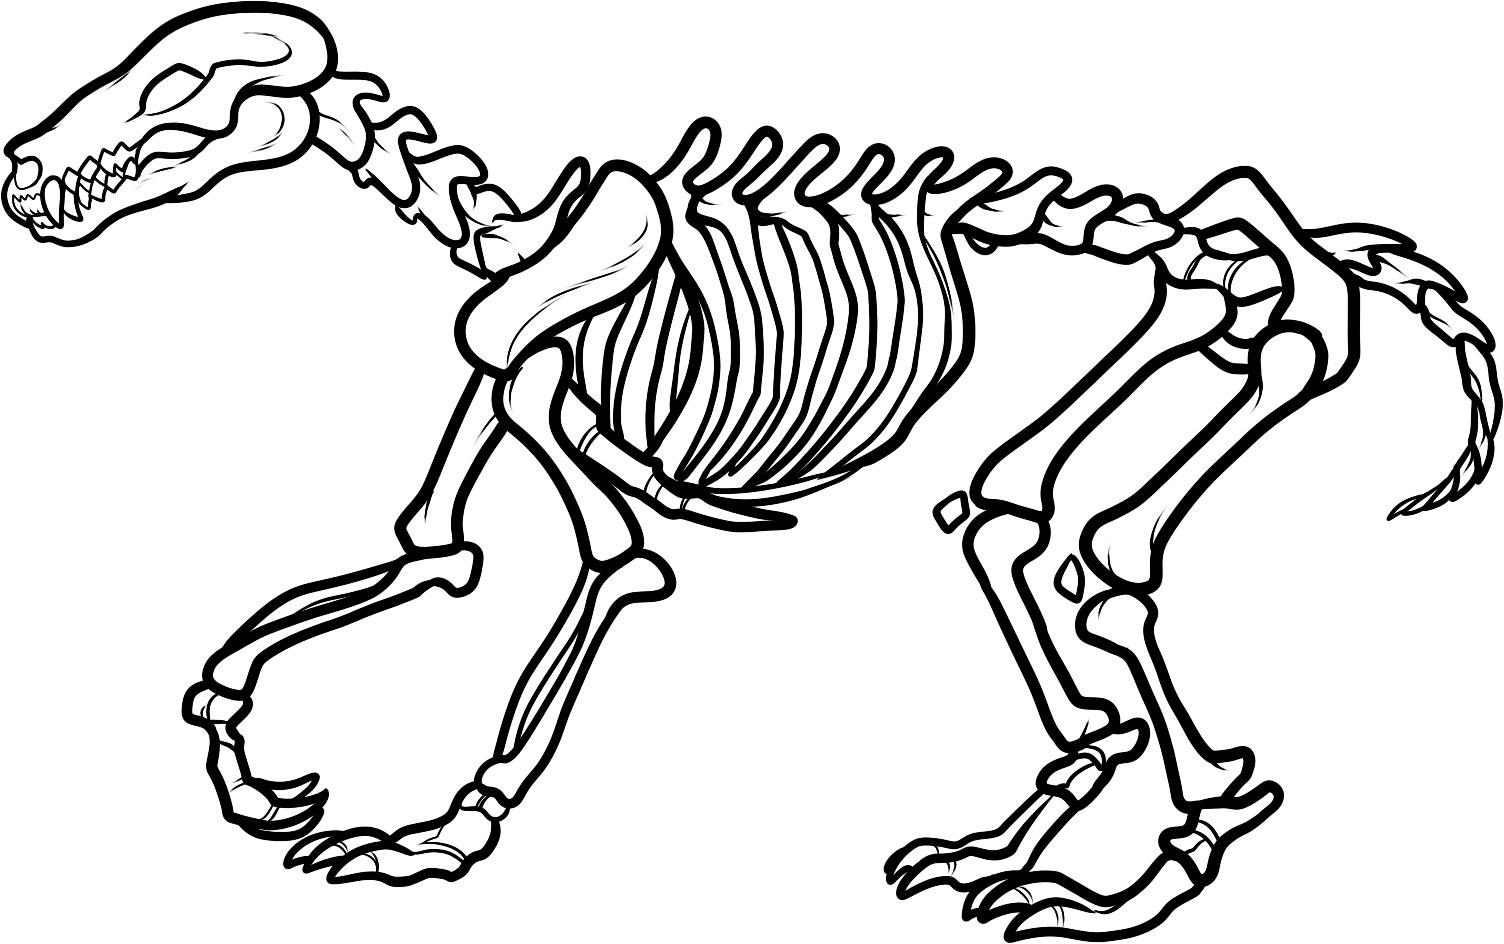 1540353960_dinosaur-skeleton-coloring-page para colorir